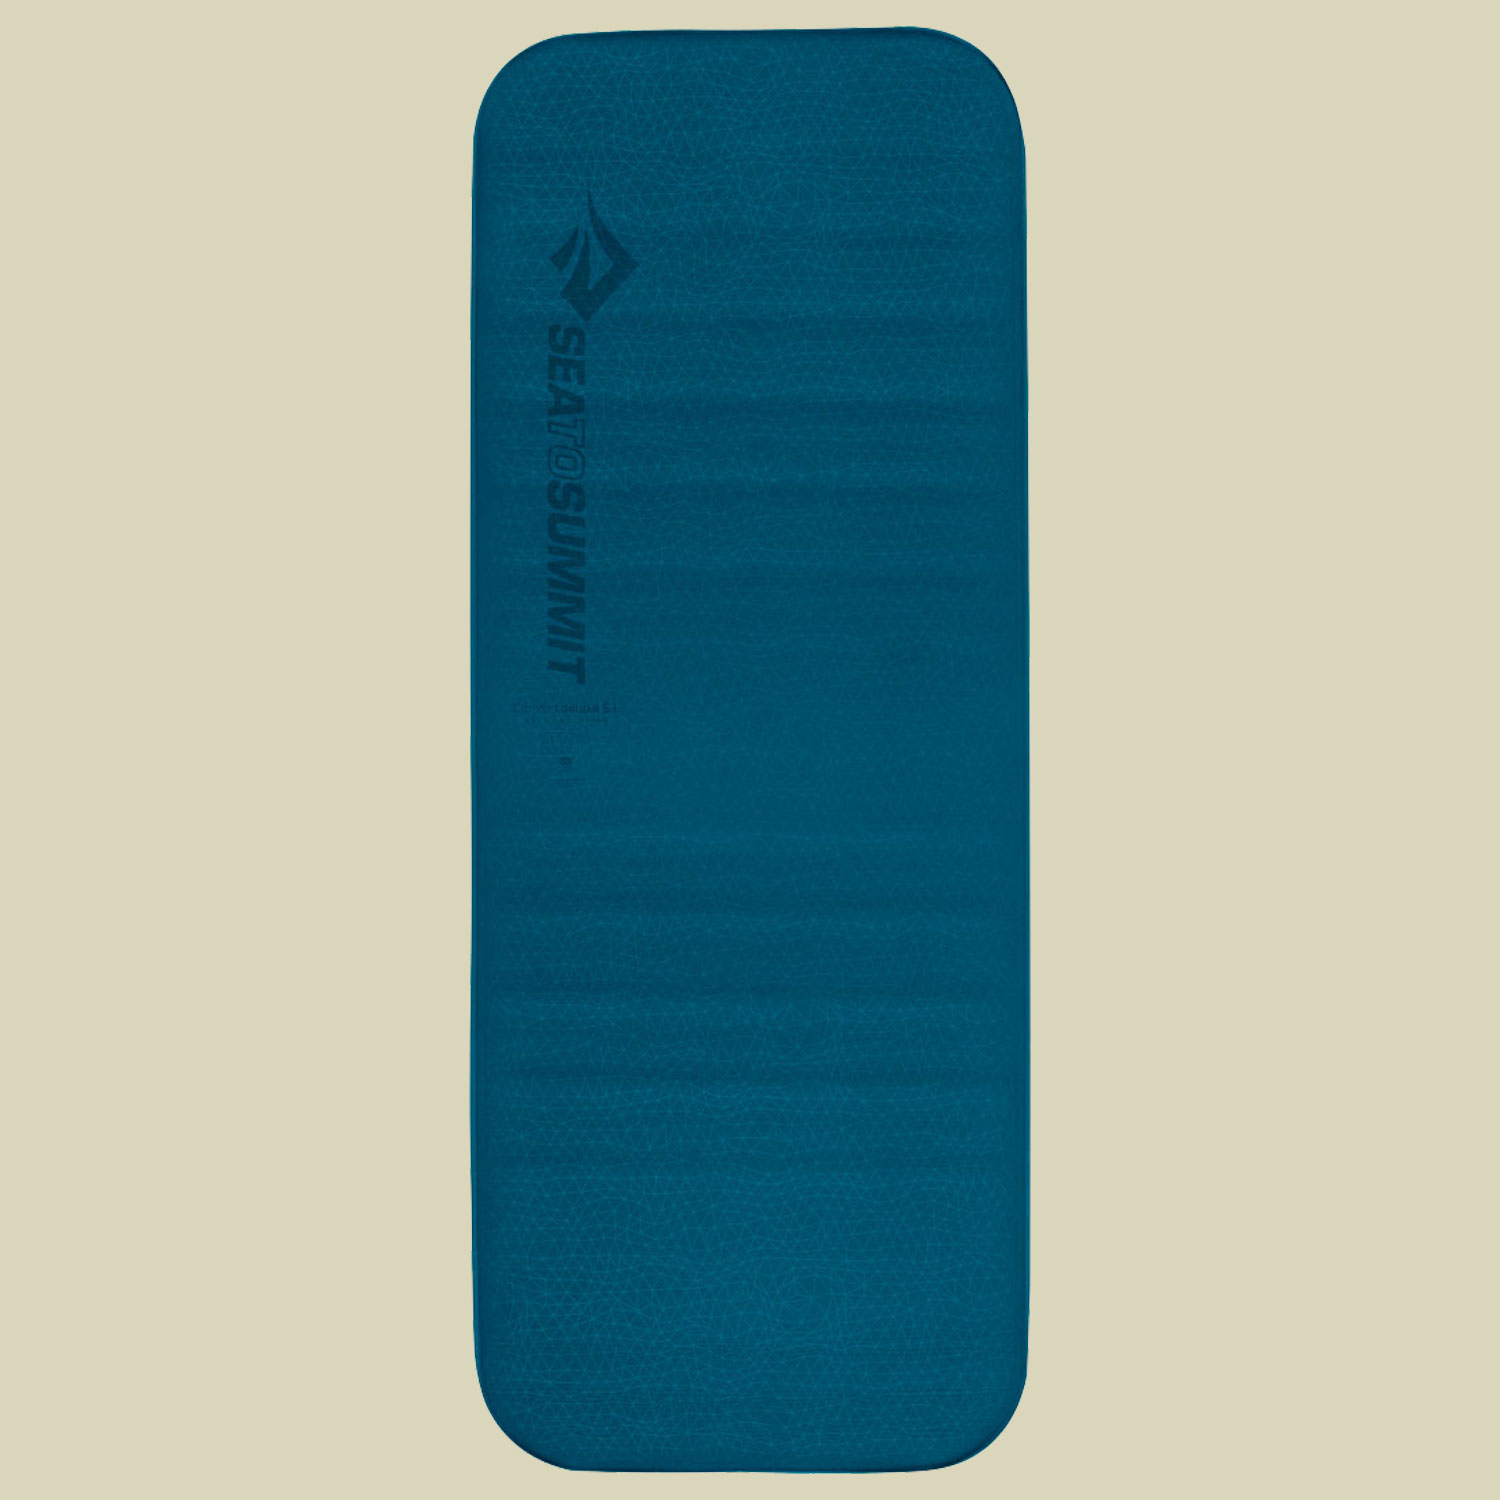 Comfort Deluxe S.I. Mat Liegefläche 201 x 76 cm (large wide) Farbe byron blue von Sea to Summit